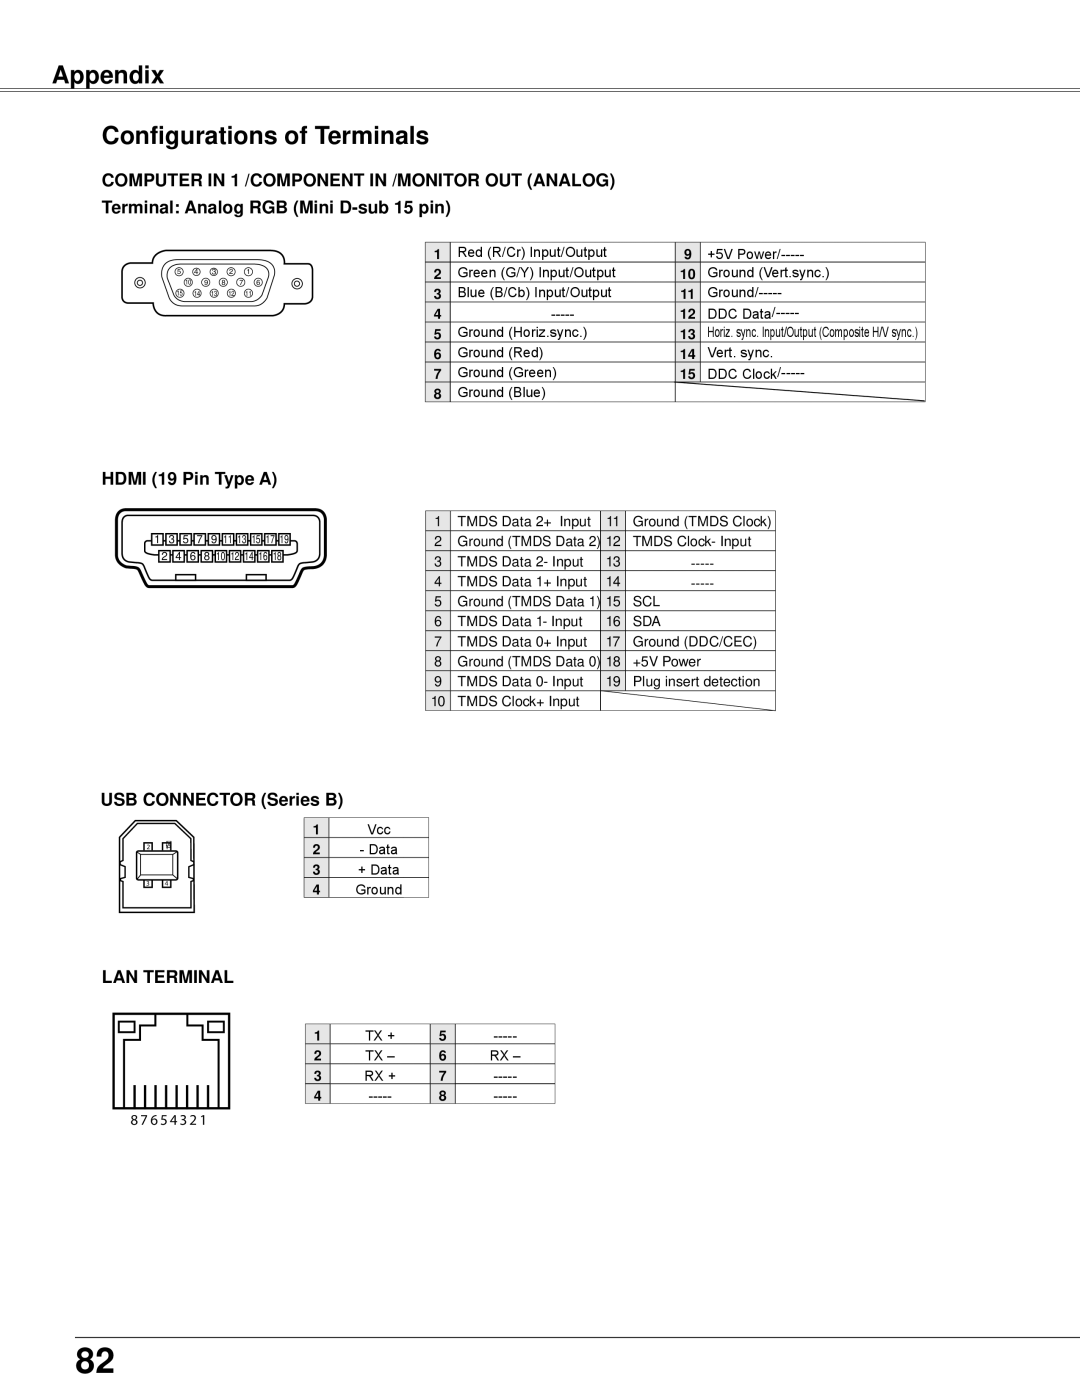 Eiki LC-WB42N Appendix Configurations of Terminals, HDMI 19 Pin Type A, USB CONNECTOR Series B, Lan Terminal, Tx +, Rx + 